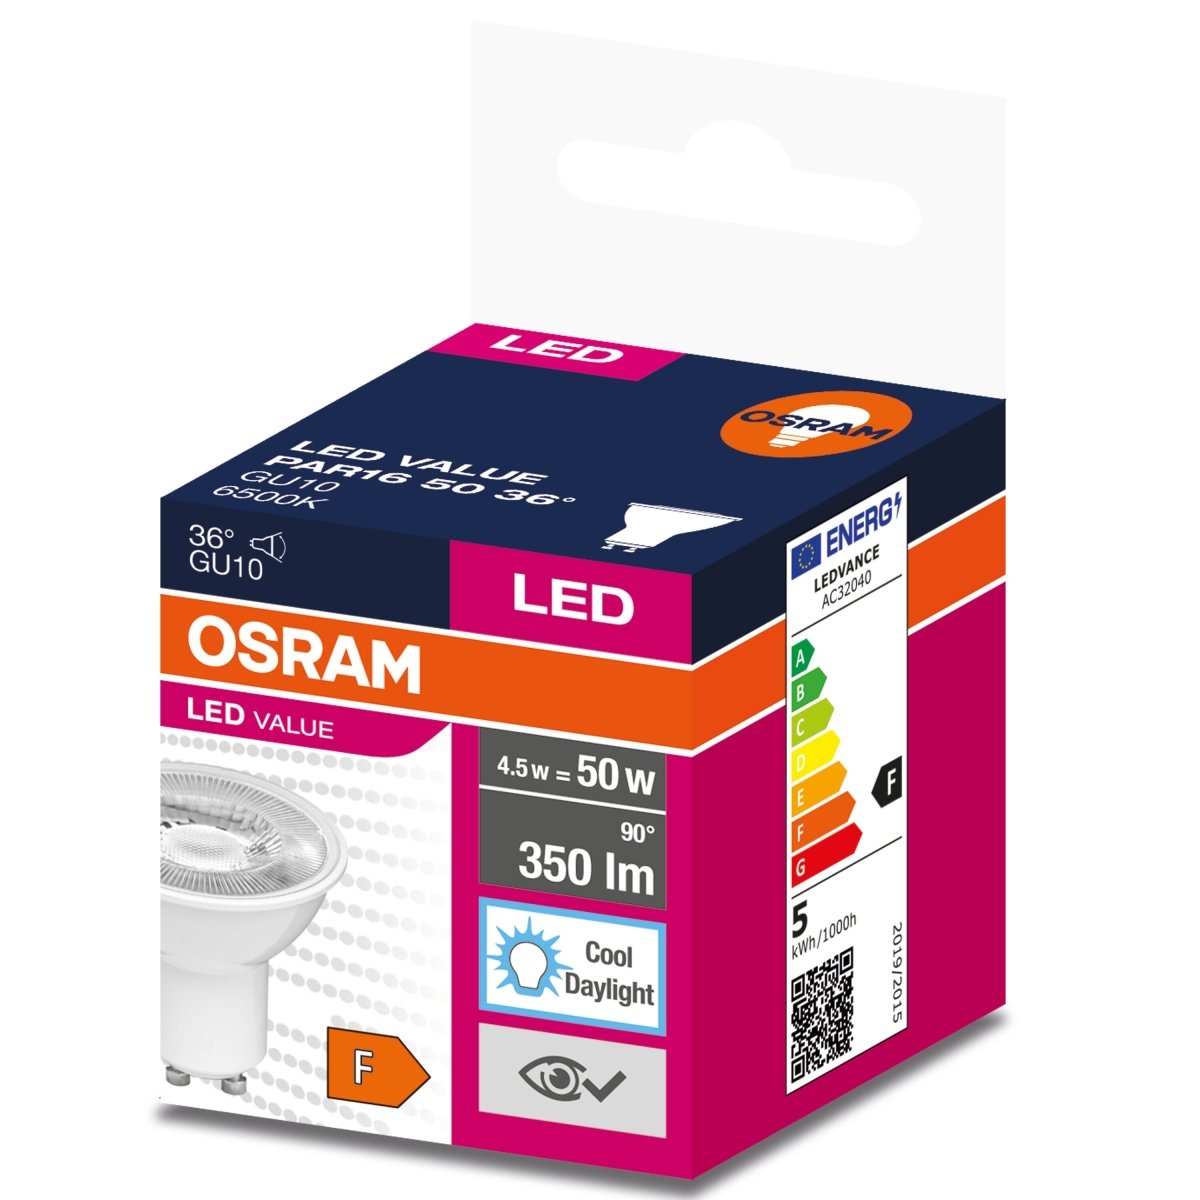 Żarówka LED GU10 4,5W LED VALUE OSRAM, odpowiednik 50W, 36 st., barwa zimna, 1 szt. - eshop LEDVANCE 4058075198647